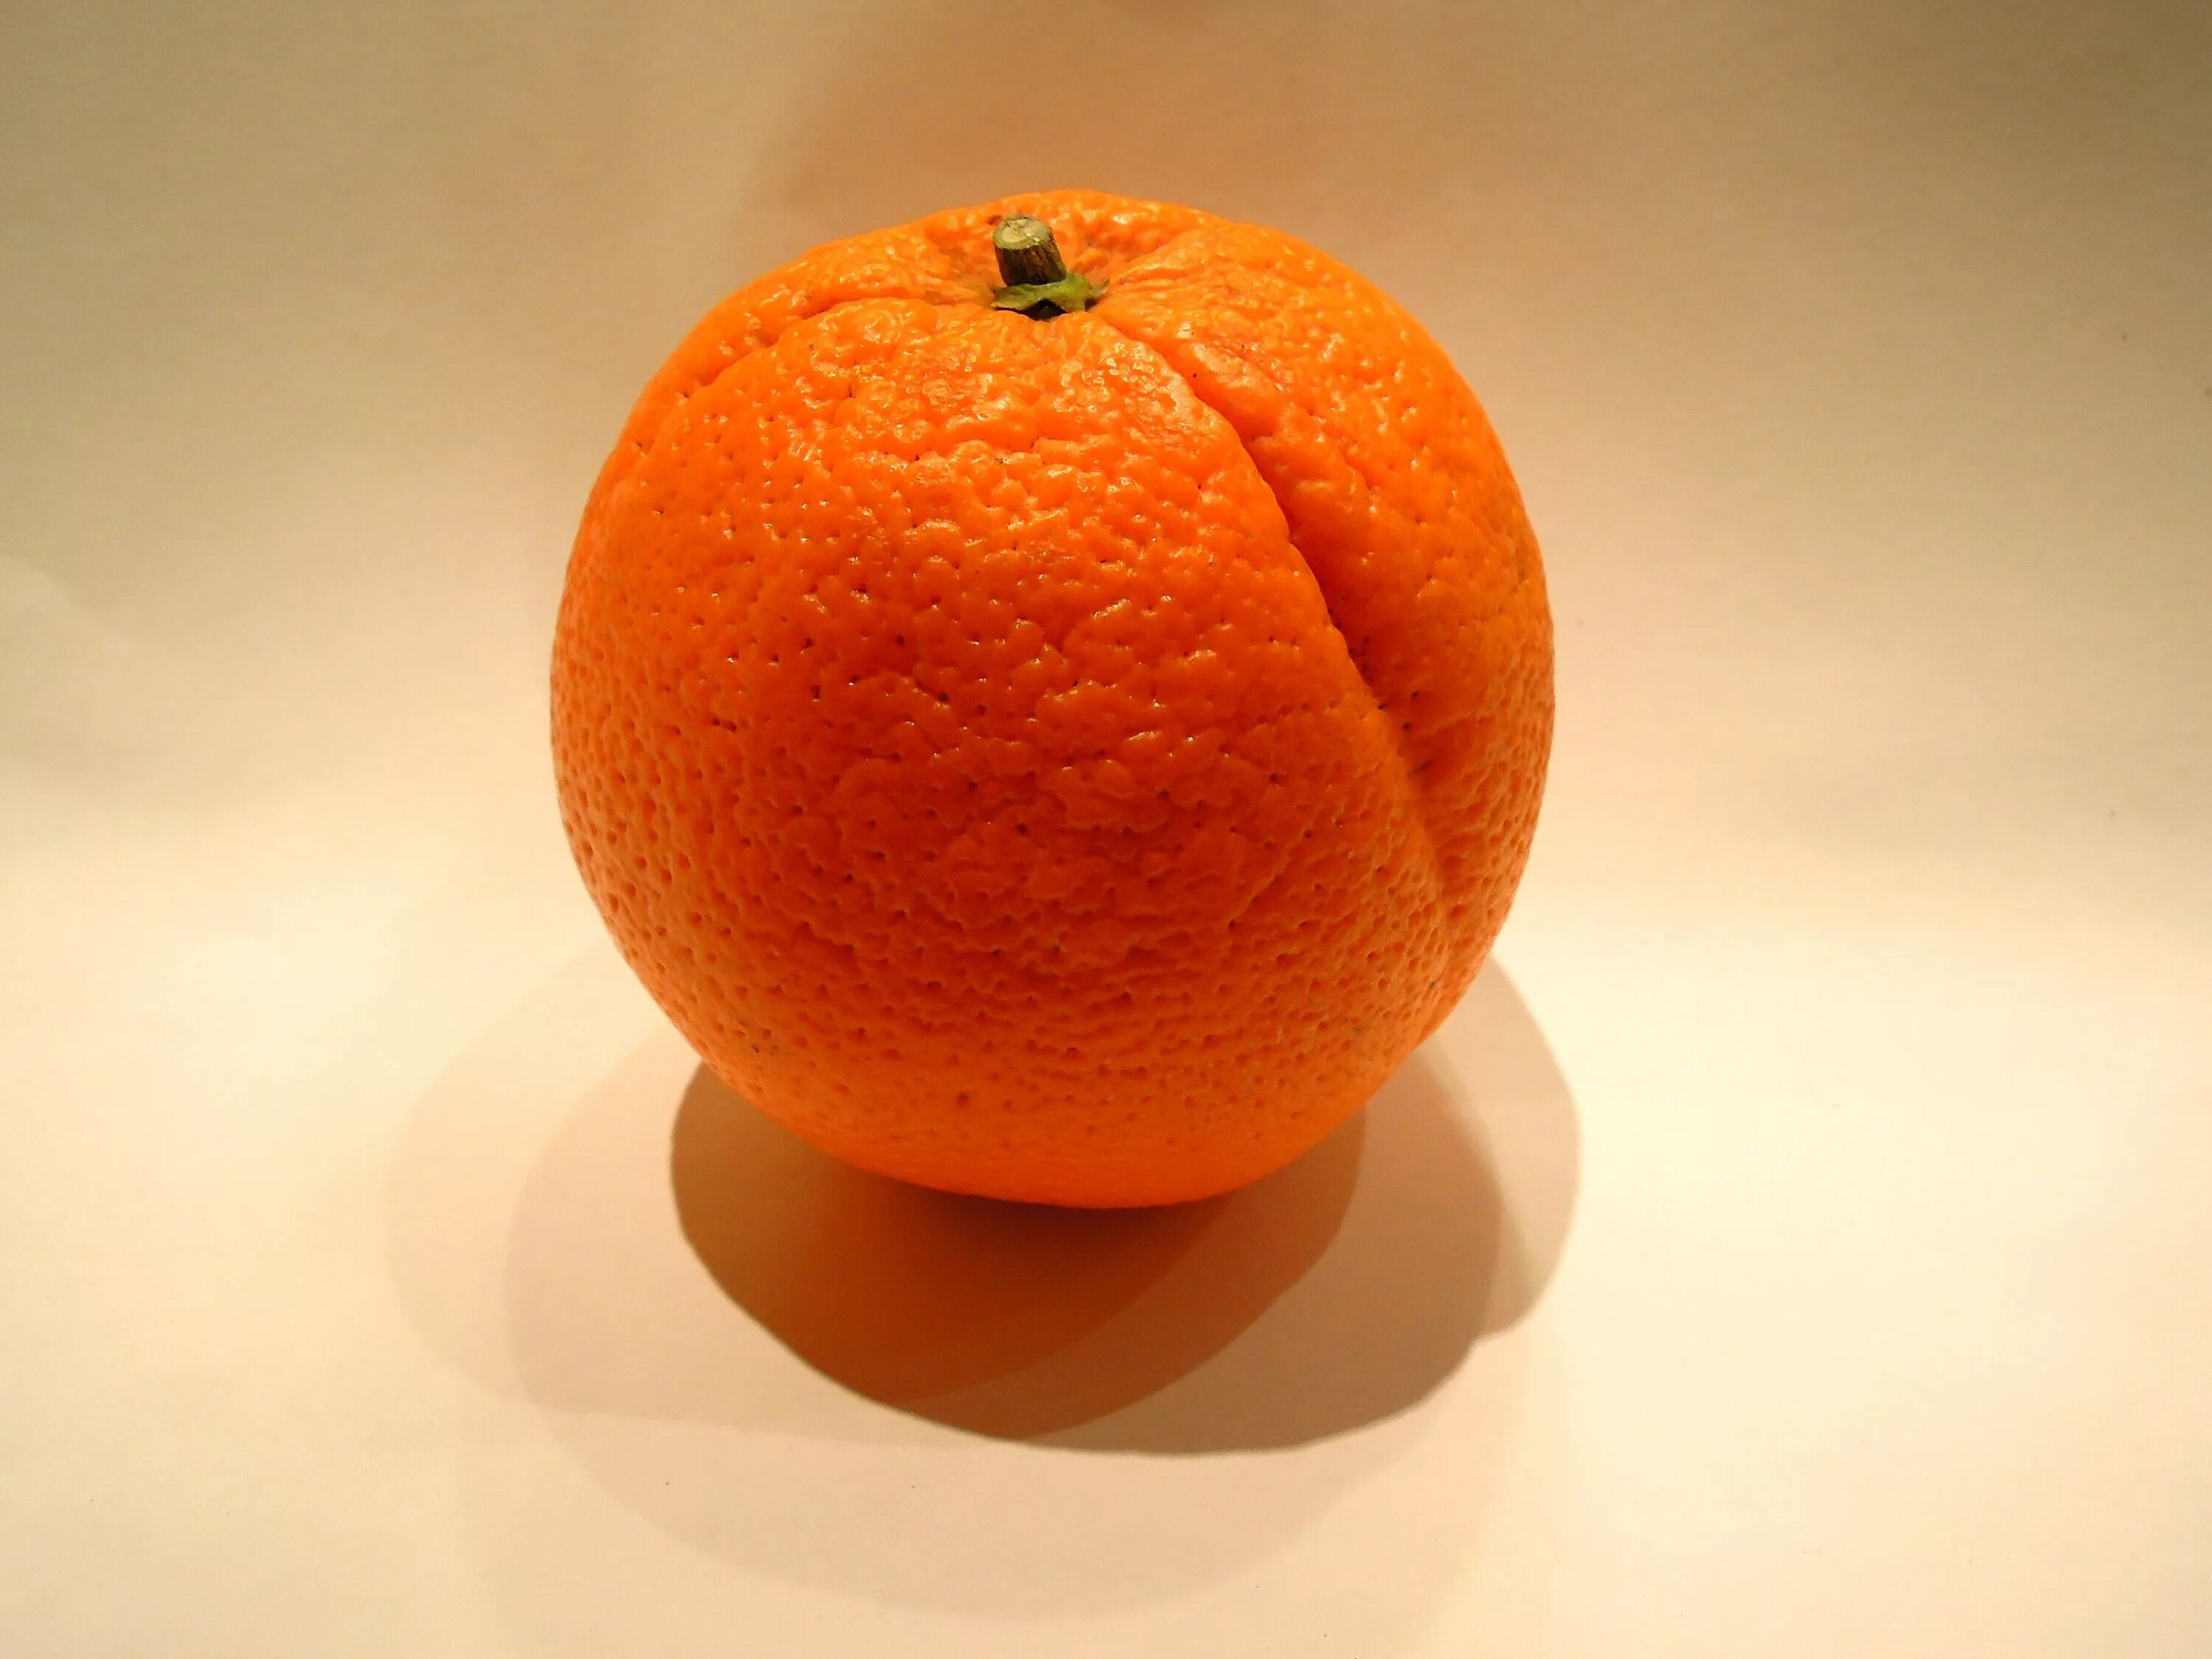 Orange choose. Мандарин :x3. Танжерин фрукт. Мандарин оранж искусственный. Apelsin 1:1.